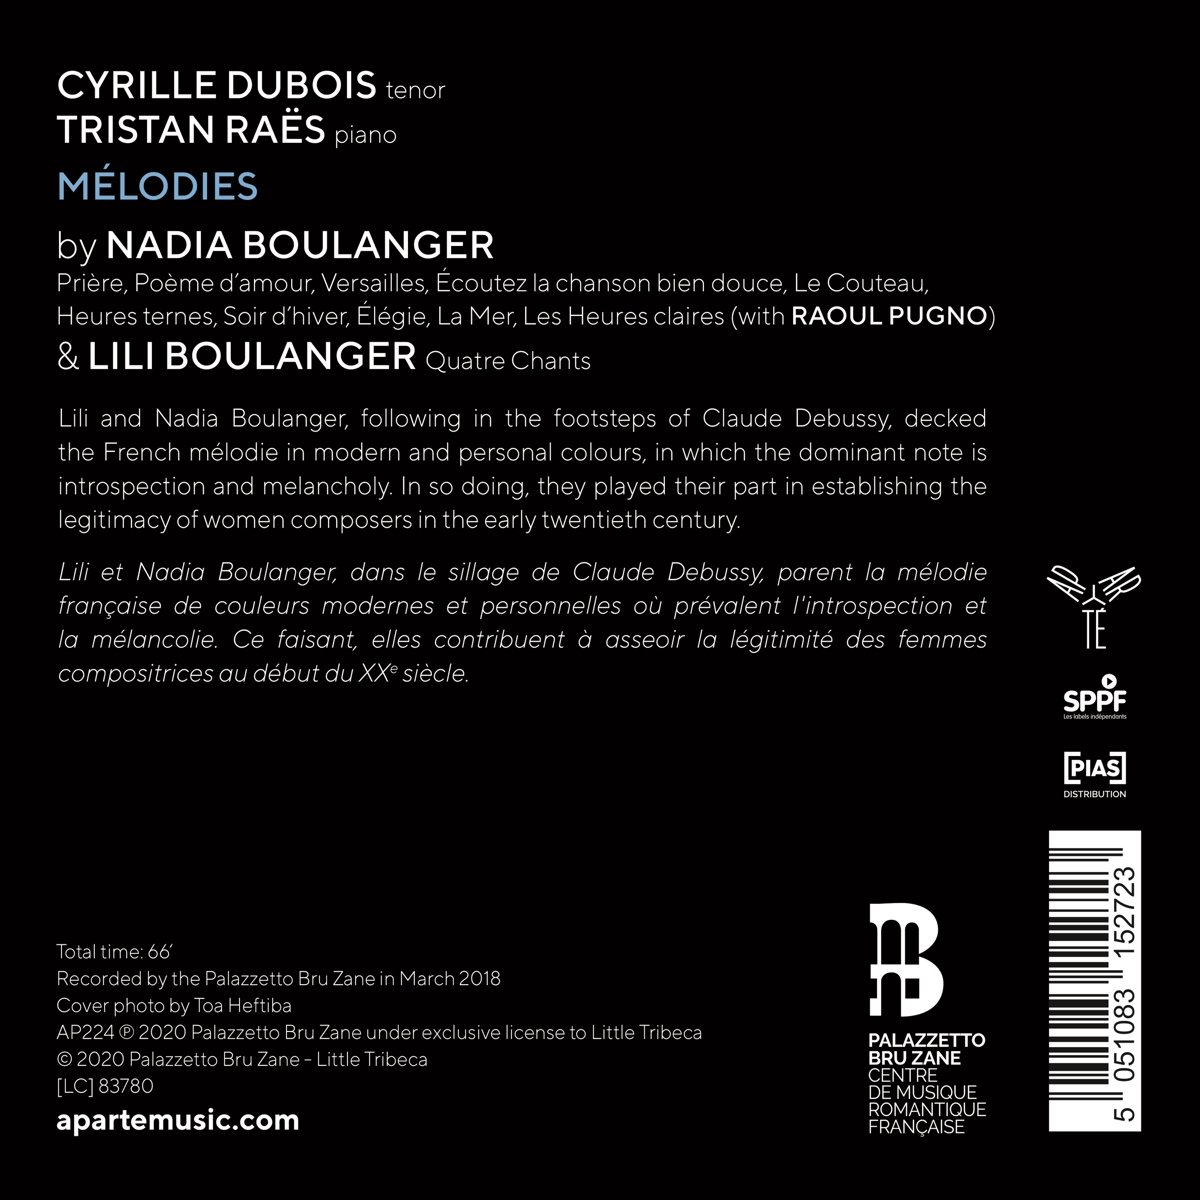 Cyrille Dubois / Tristan Raes 릴리 / 나디아 불랑제: 가곡집 (Lili / Nadia Boulanger: Melodies)